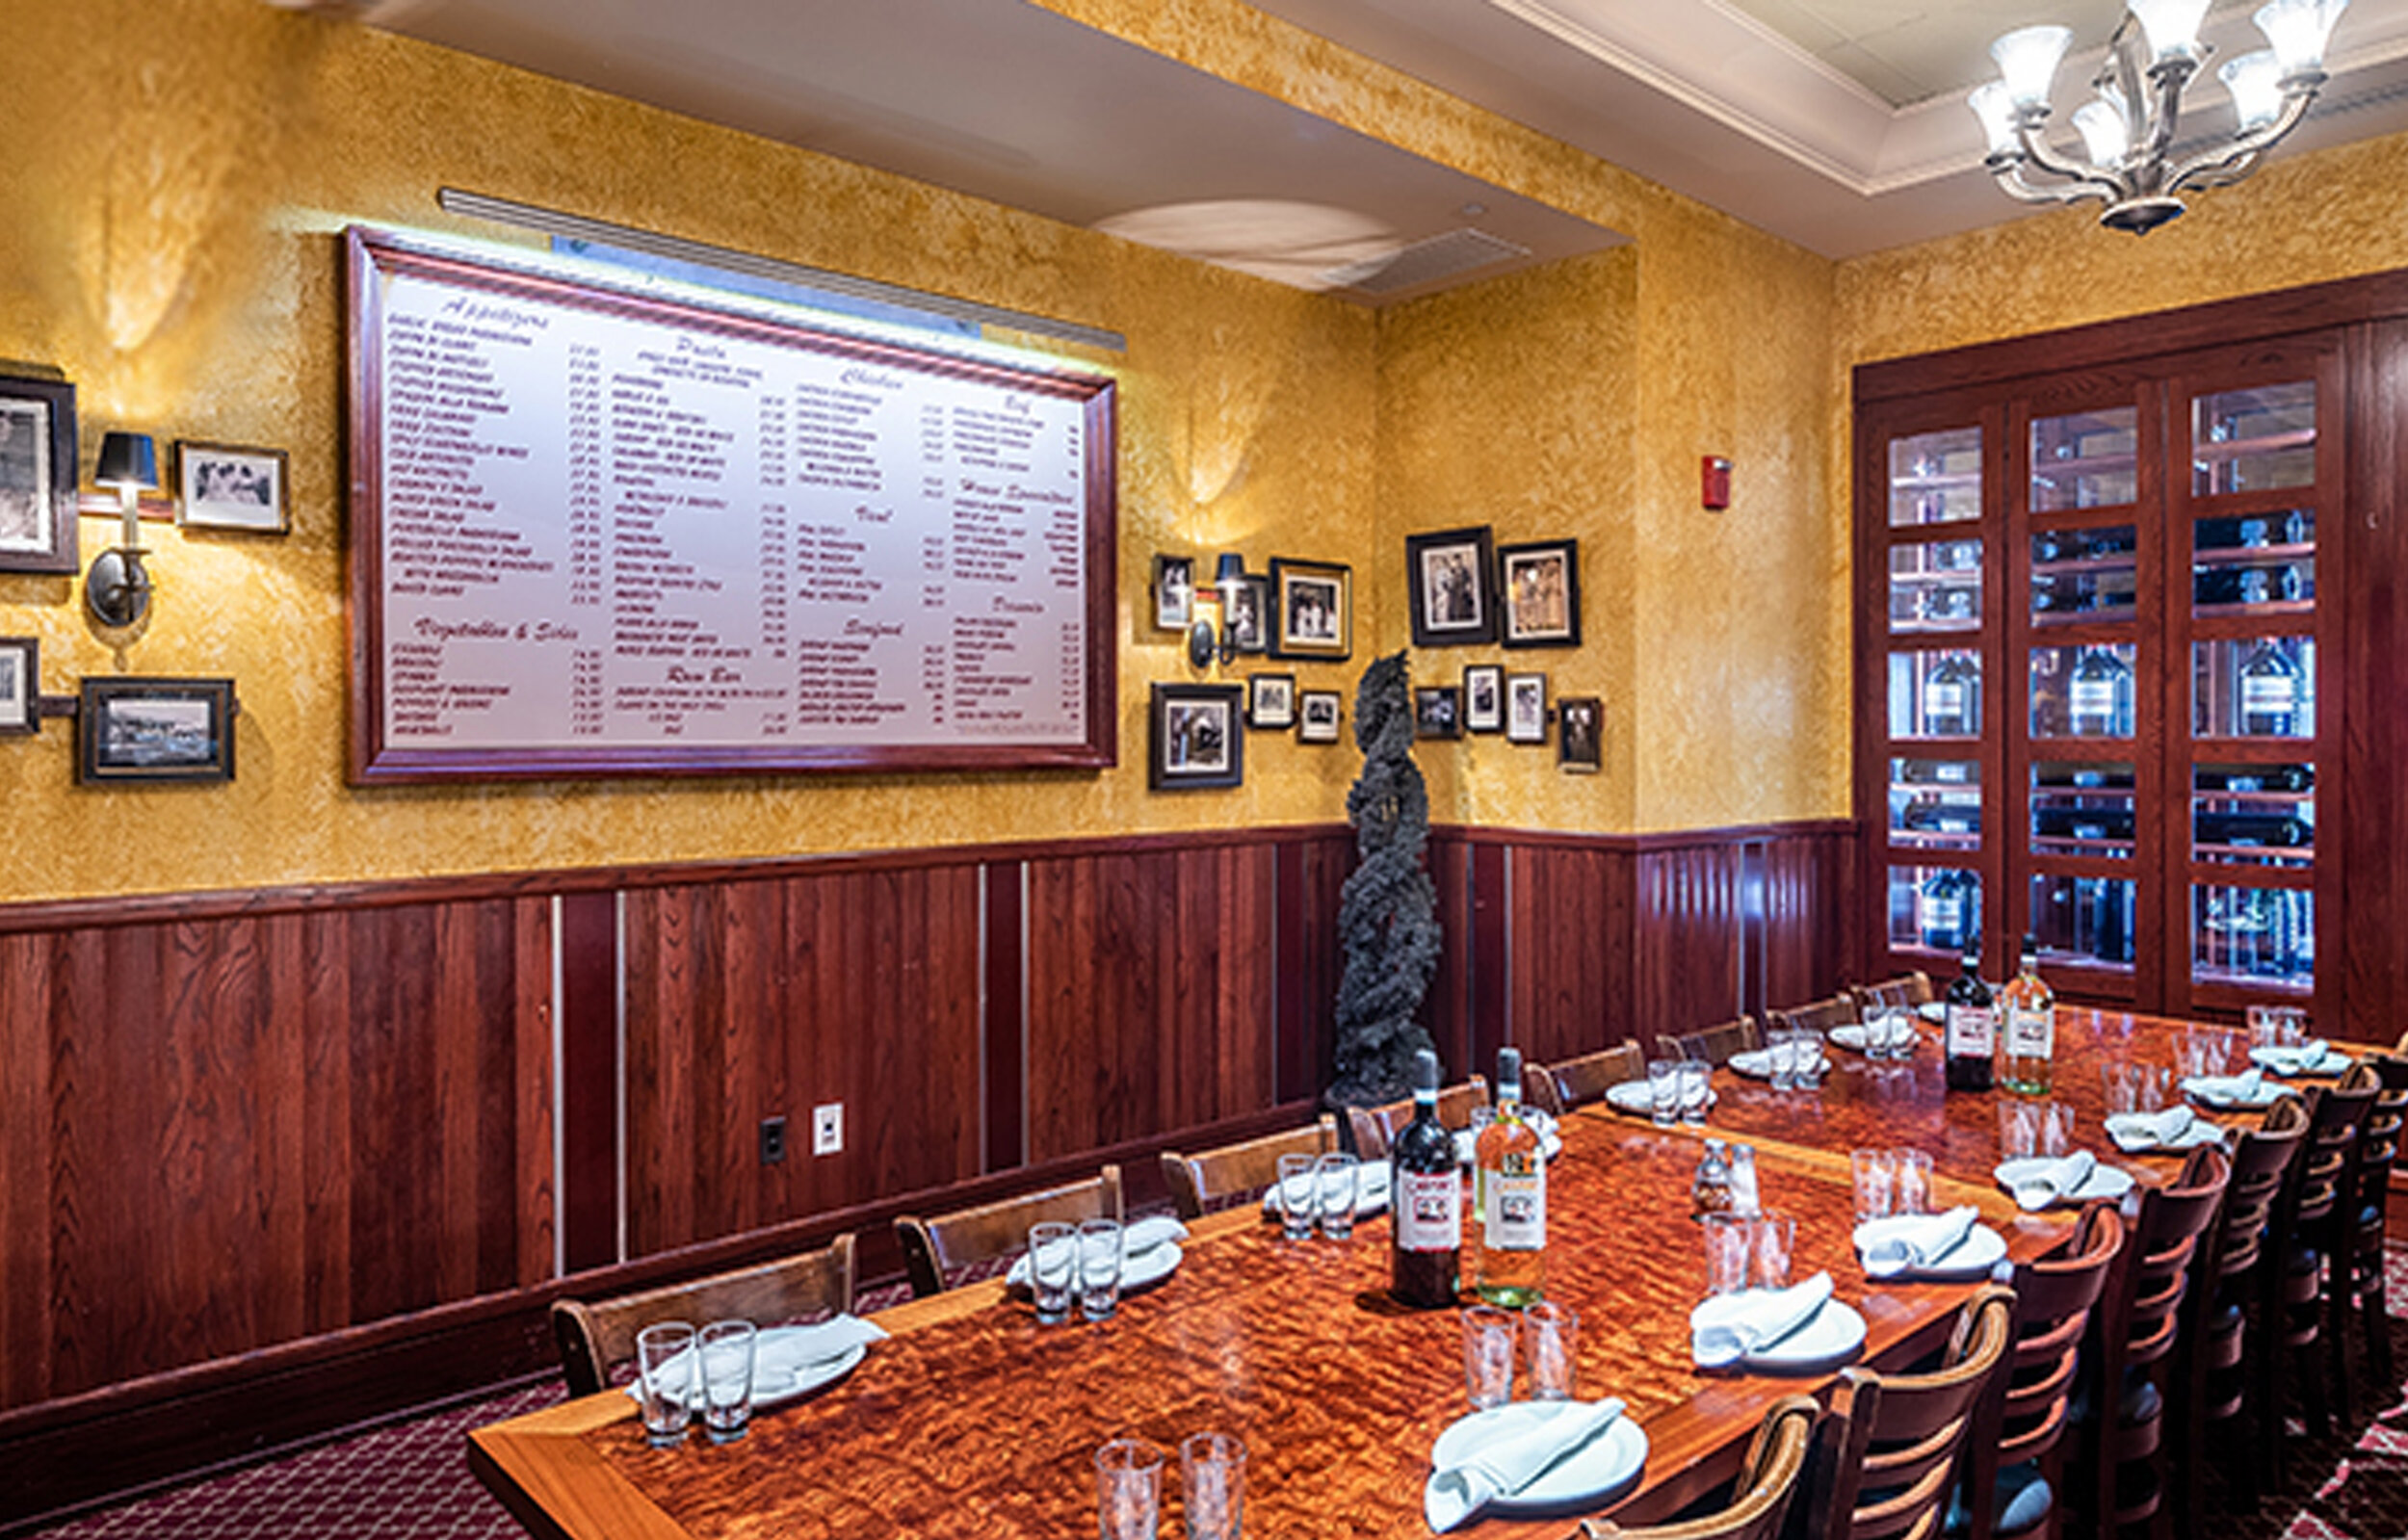 Carmine's Italian Restaurant, Botticelli Room - Washington, DC